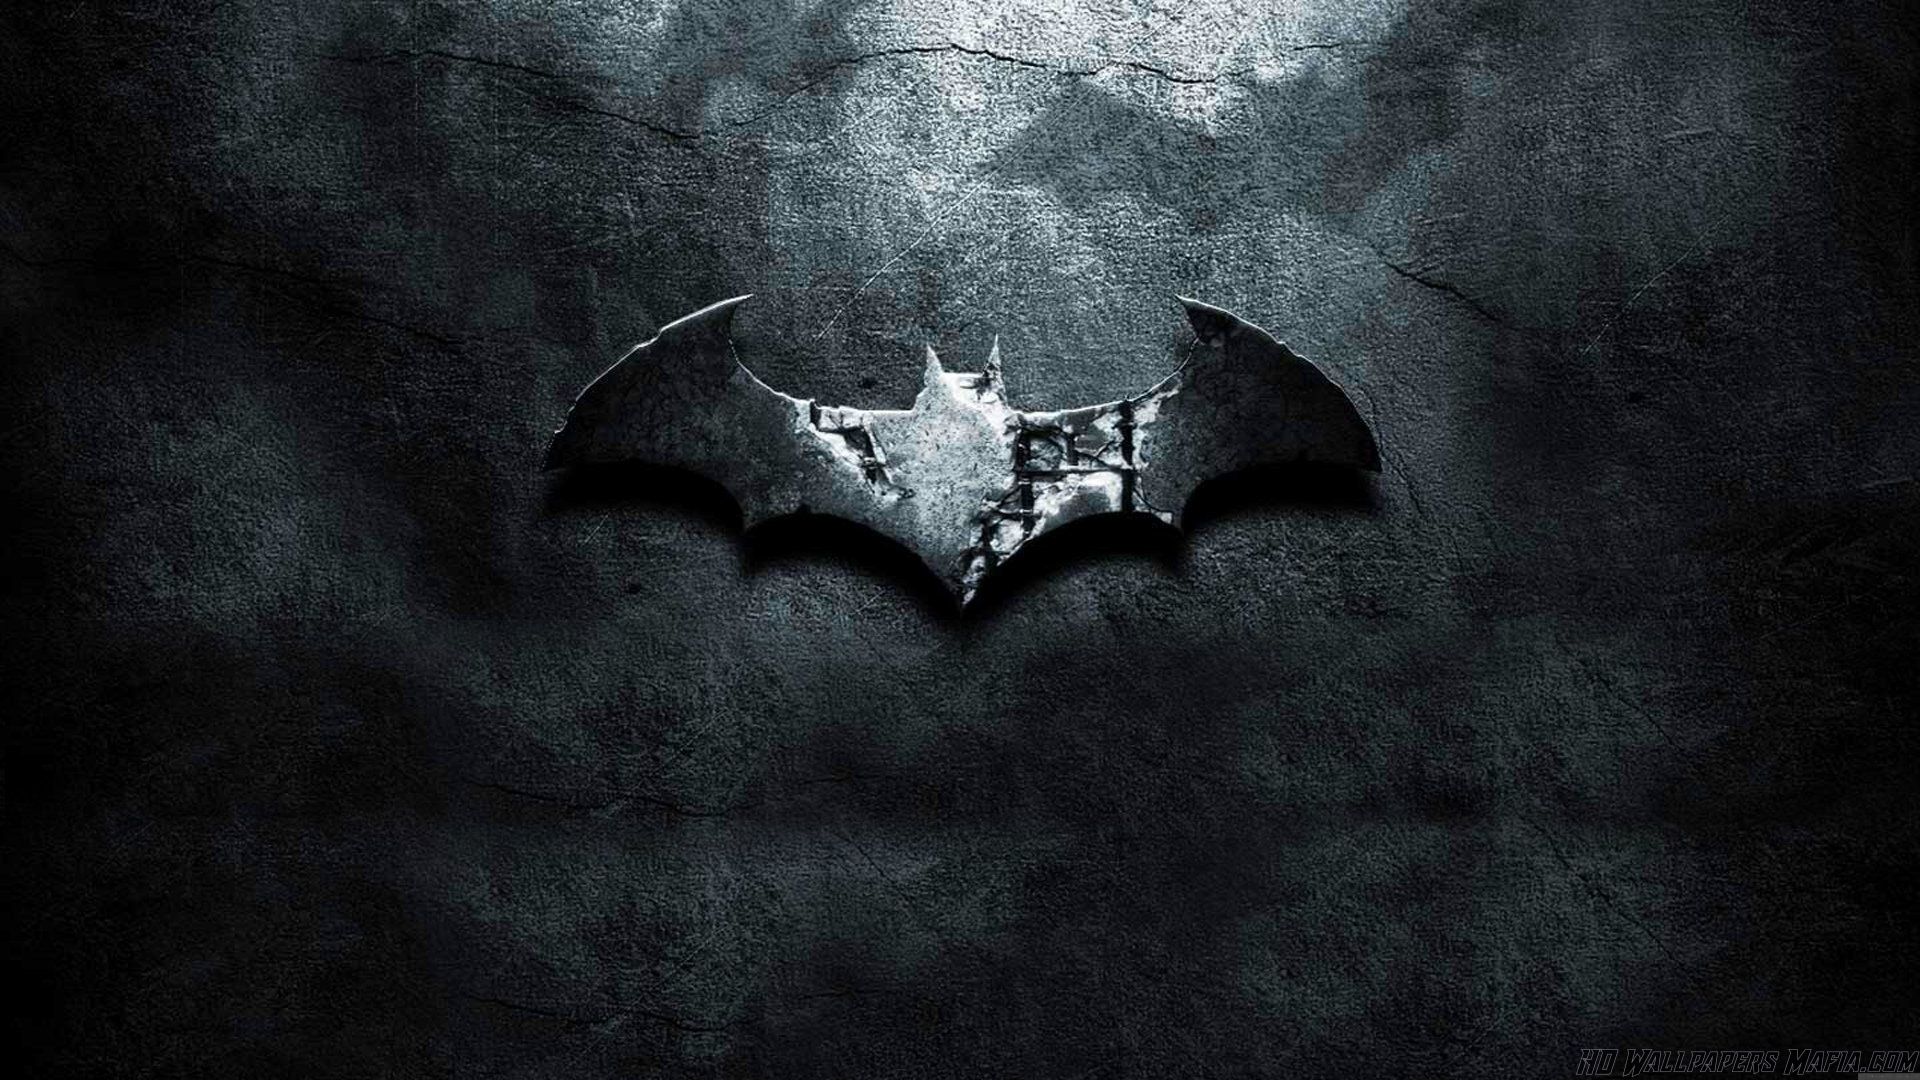 Batman Picture10. Batman wallpaper, Batman background, Batman